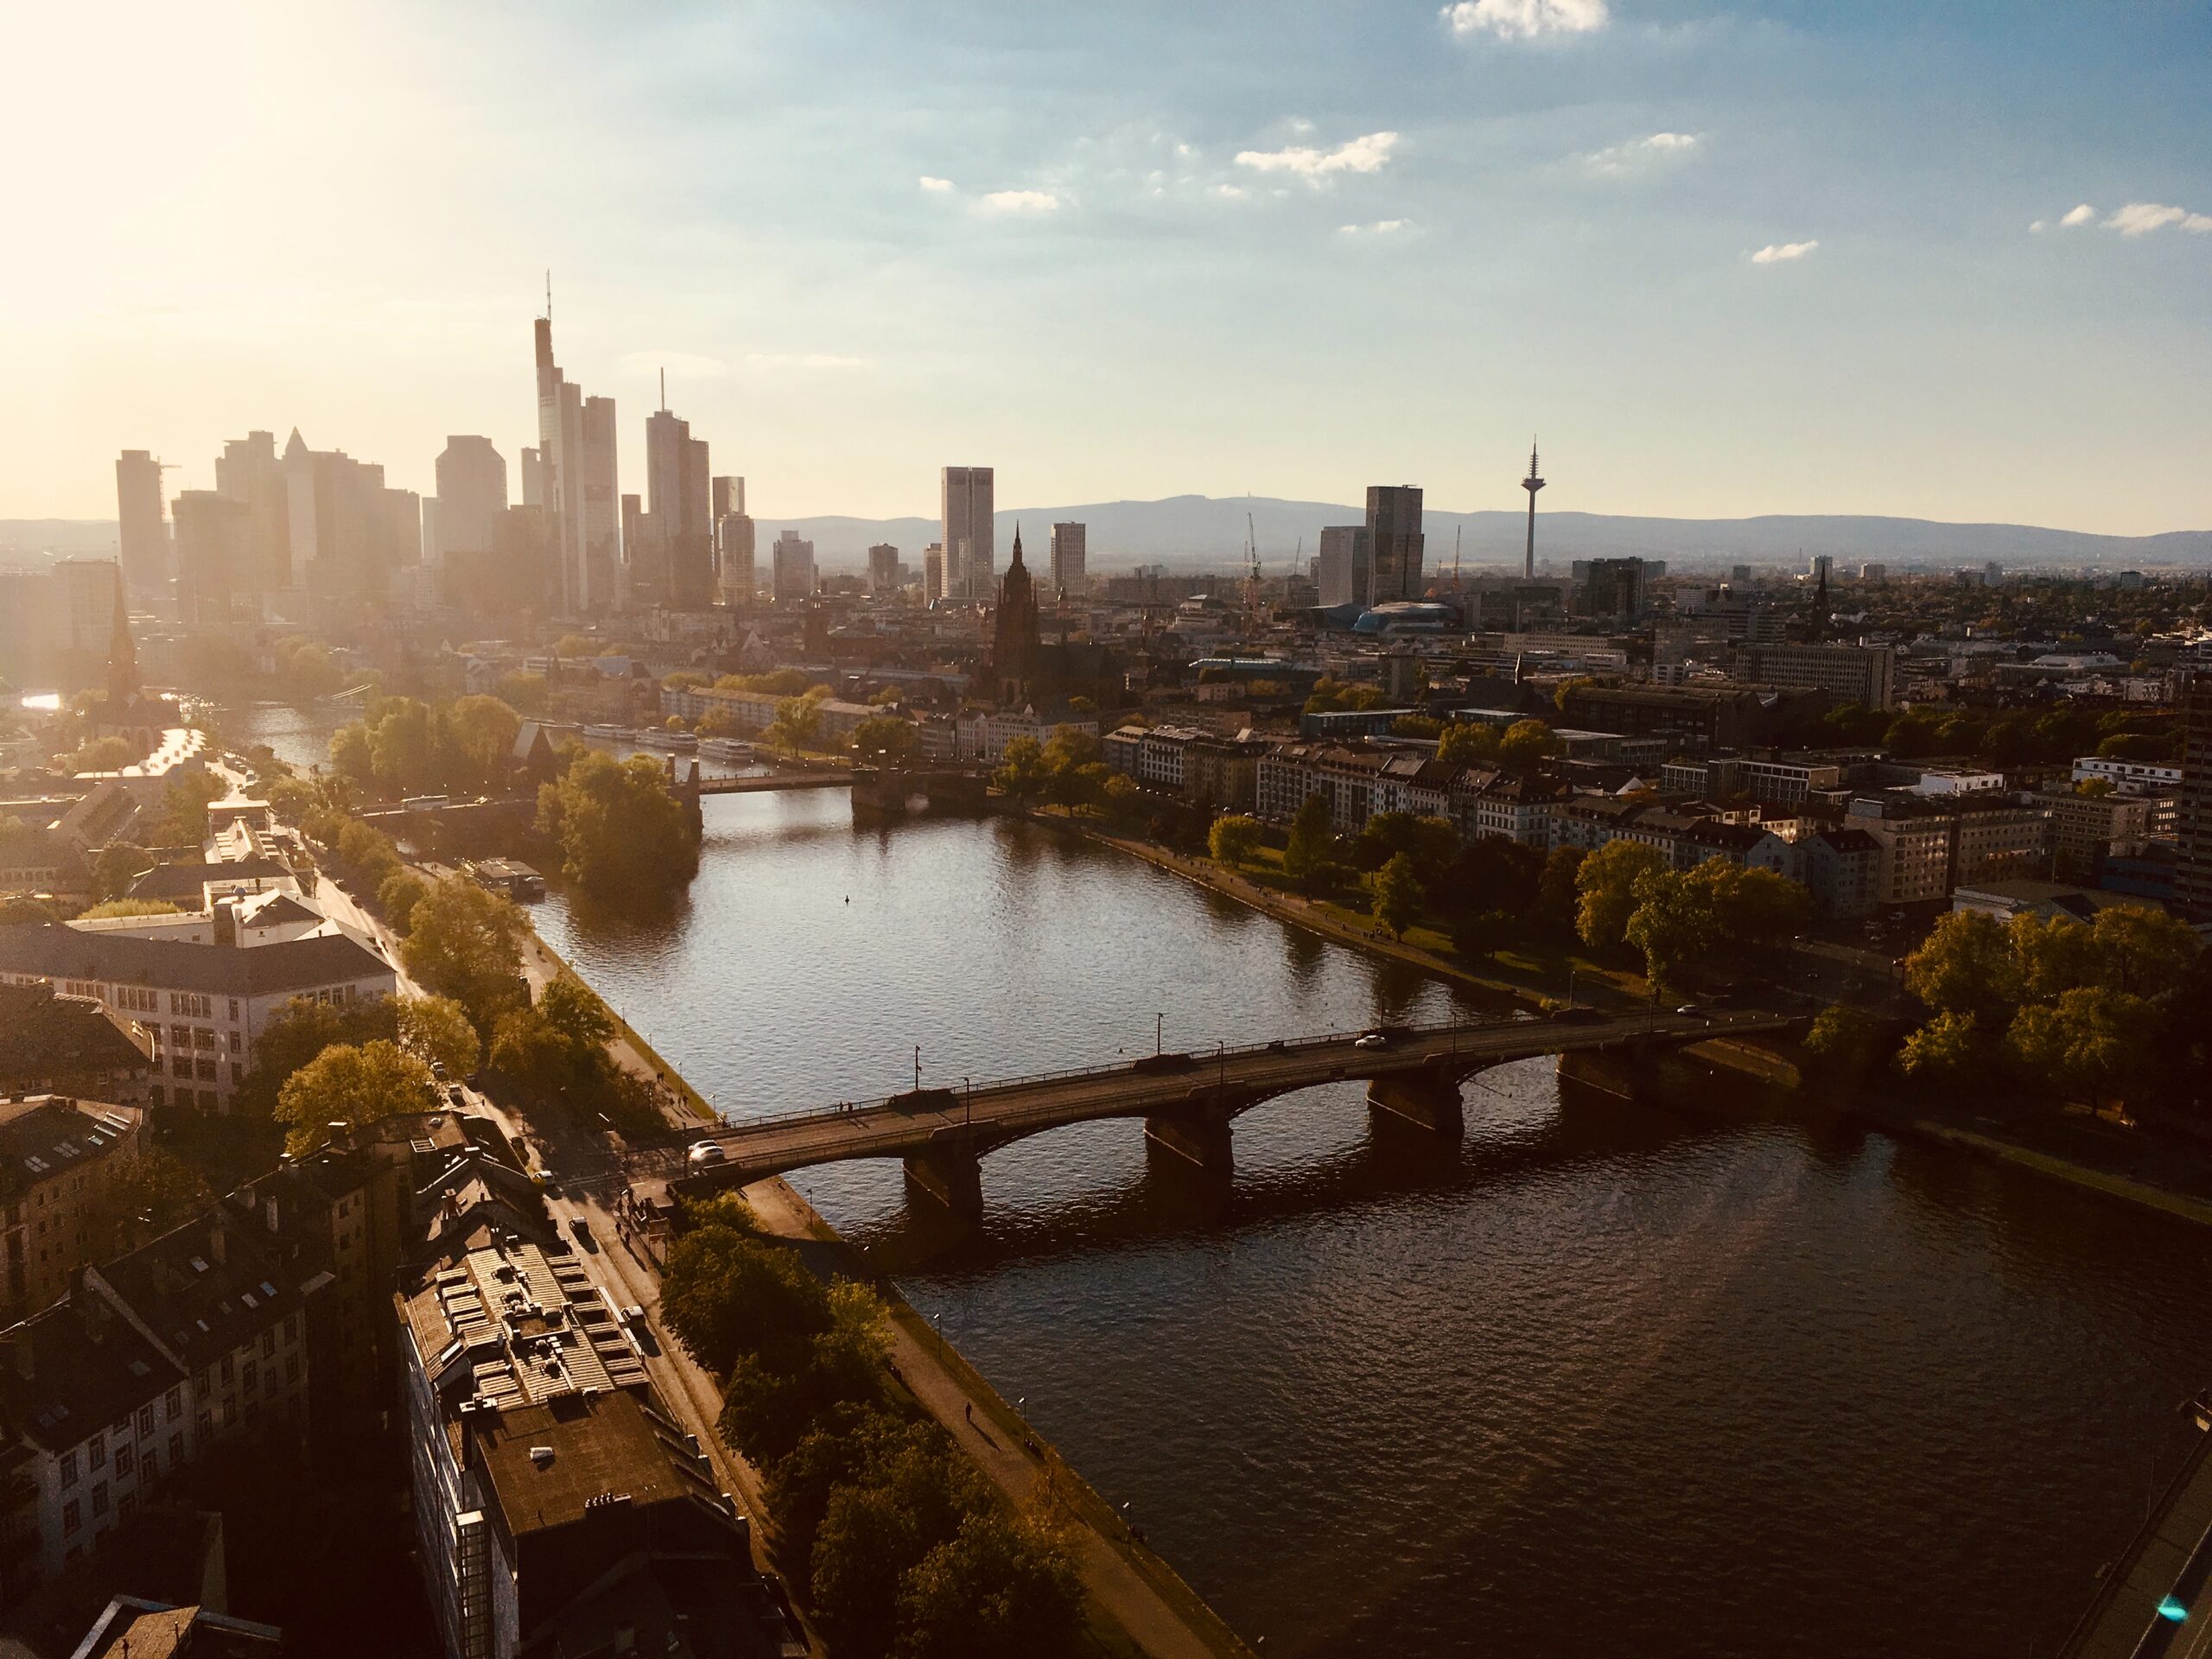 The Frankfurt skyline at sunset